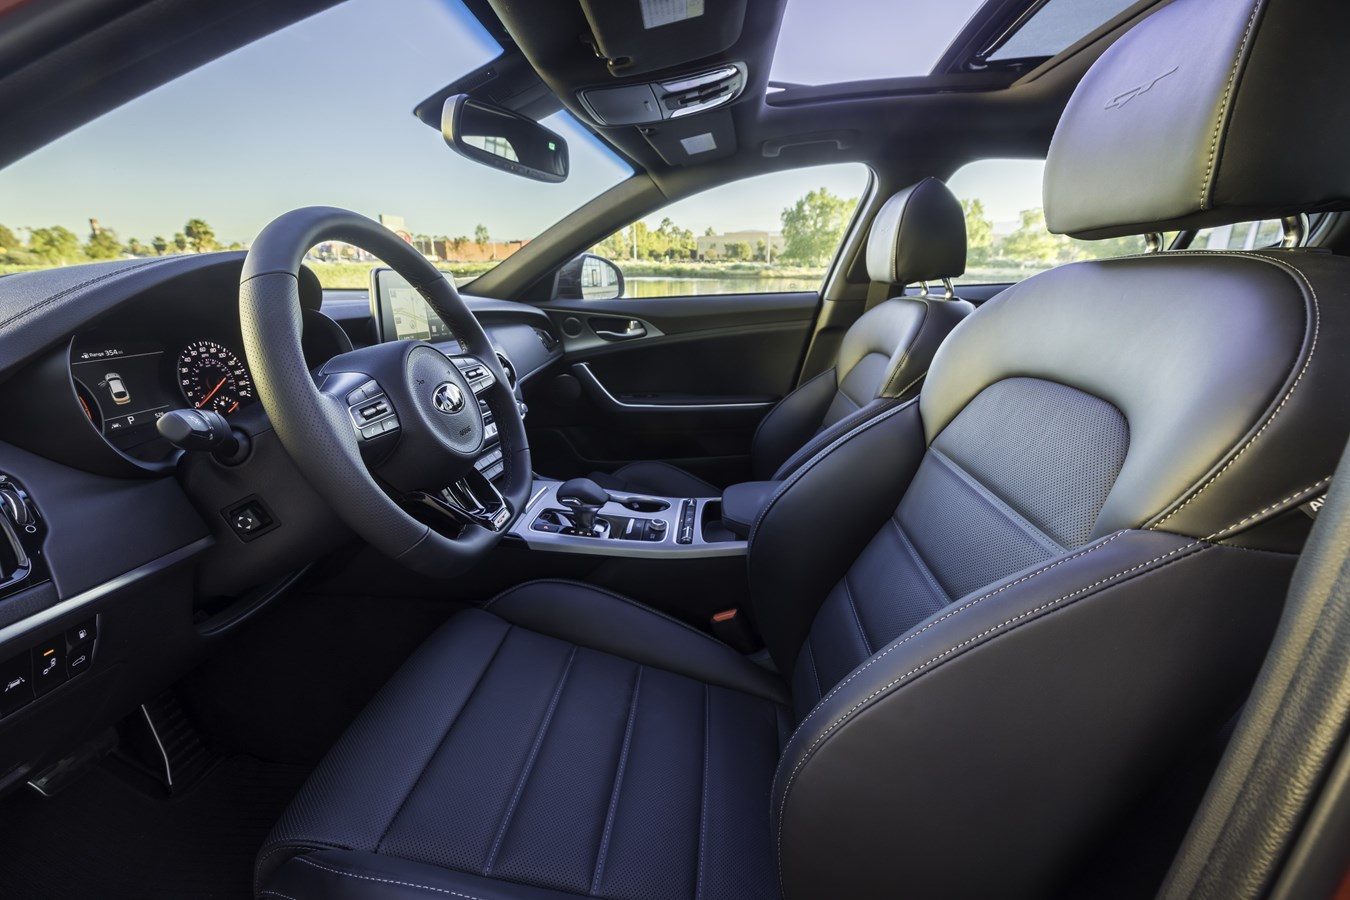 2020 Kia Stinger interior 01 1350x900 - کیا استینگر GT 2020 خودرویی اسپرت با پیشرانه ای قوی